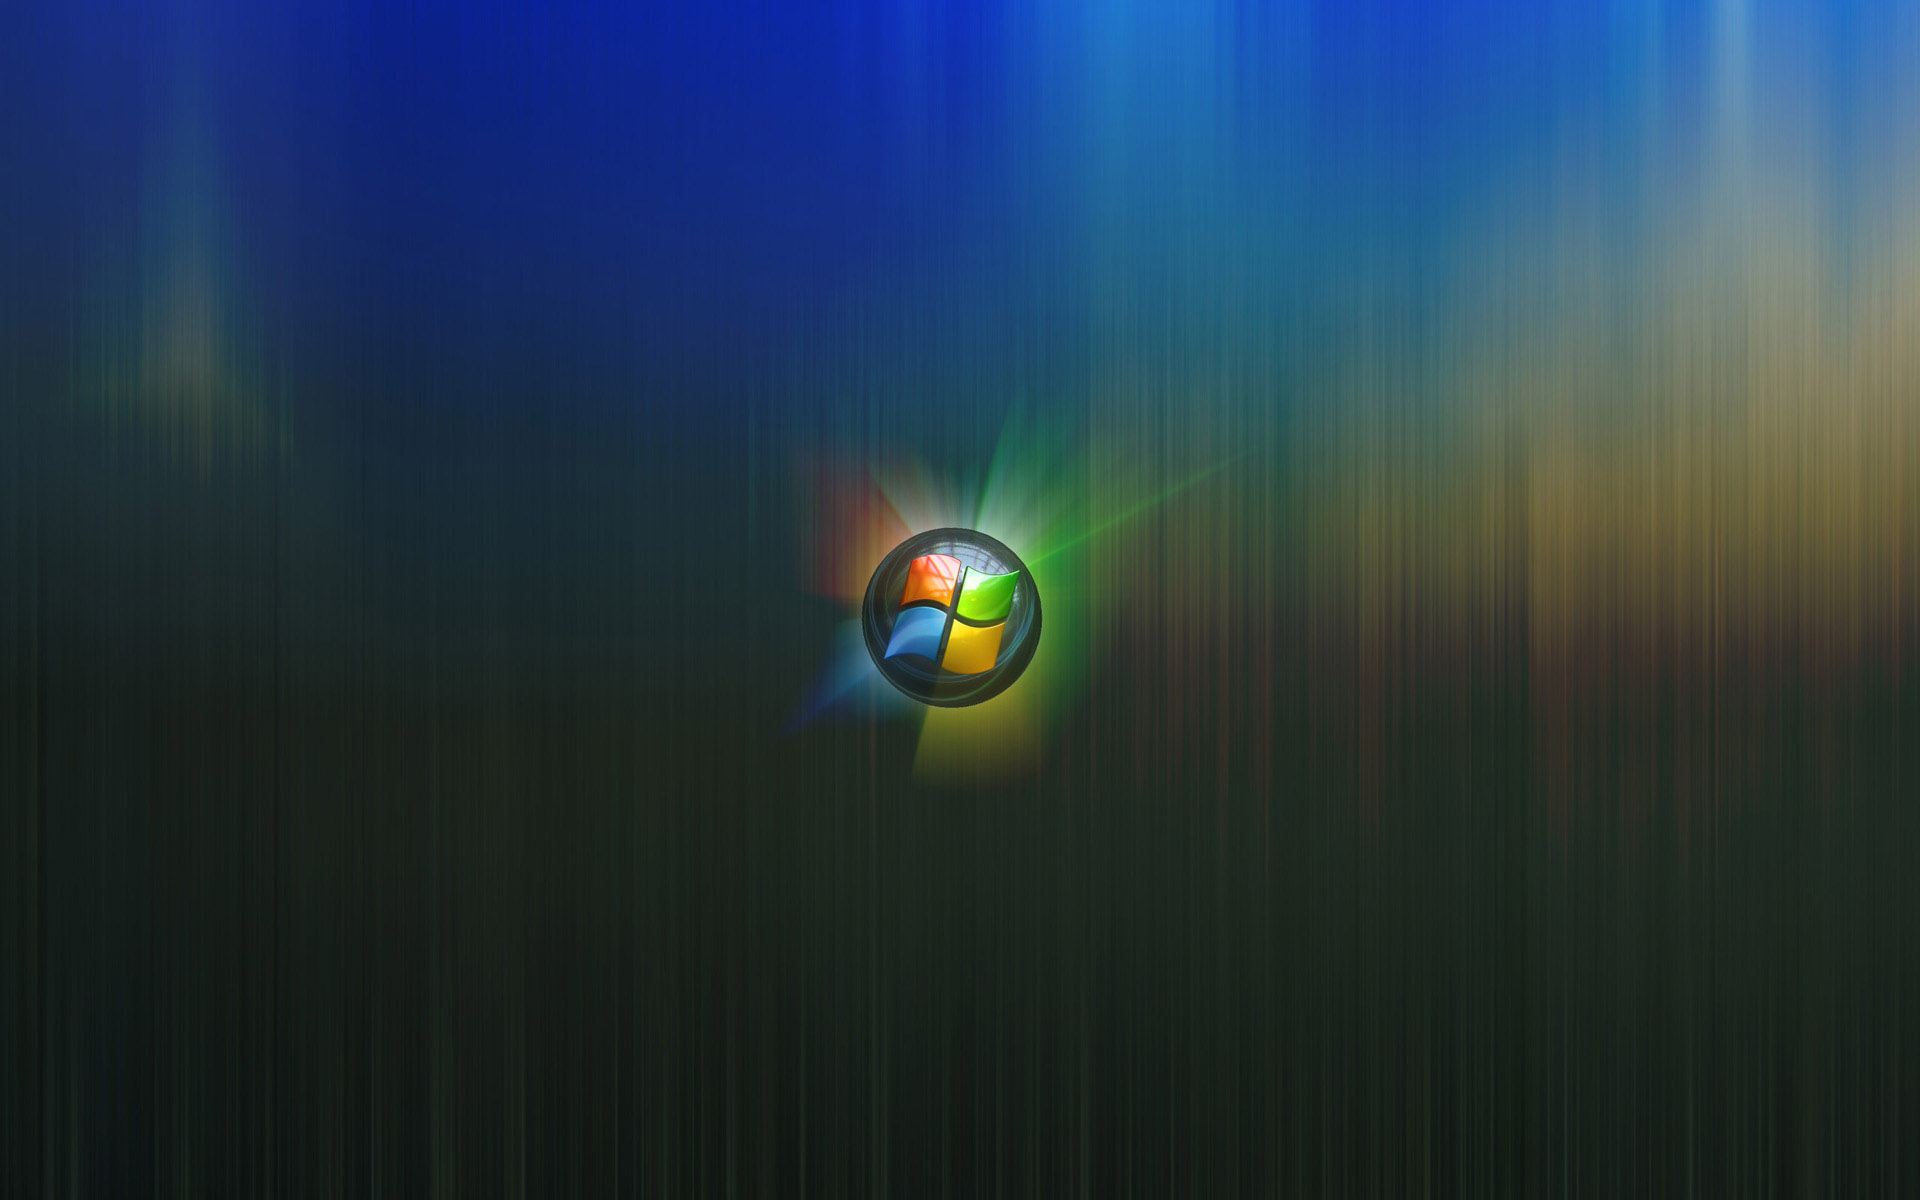 Vista Wallpaper Windows Linux Photography Desktop